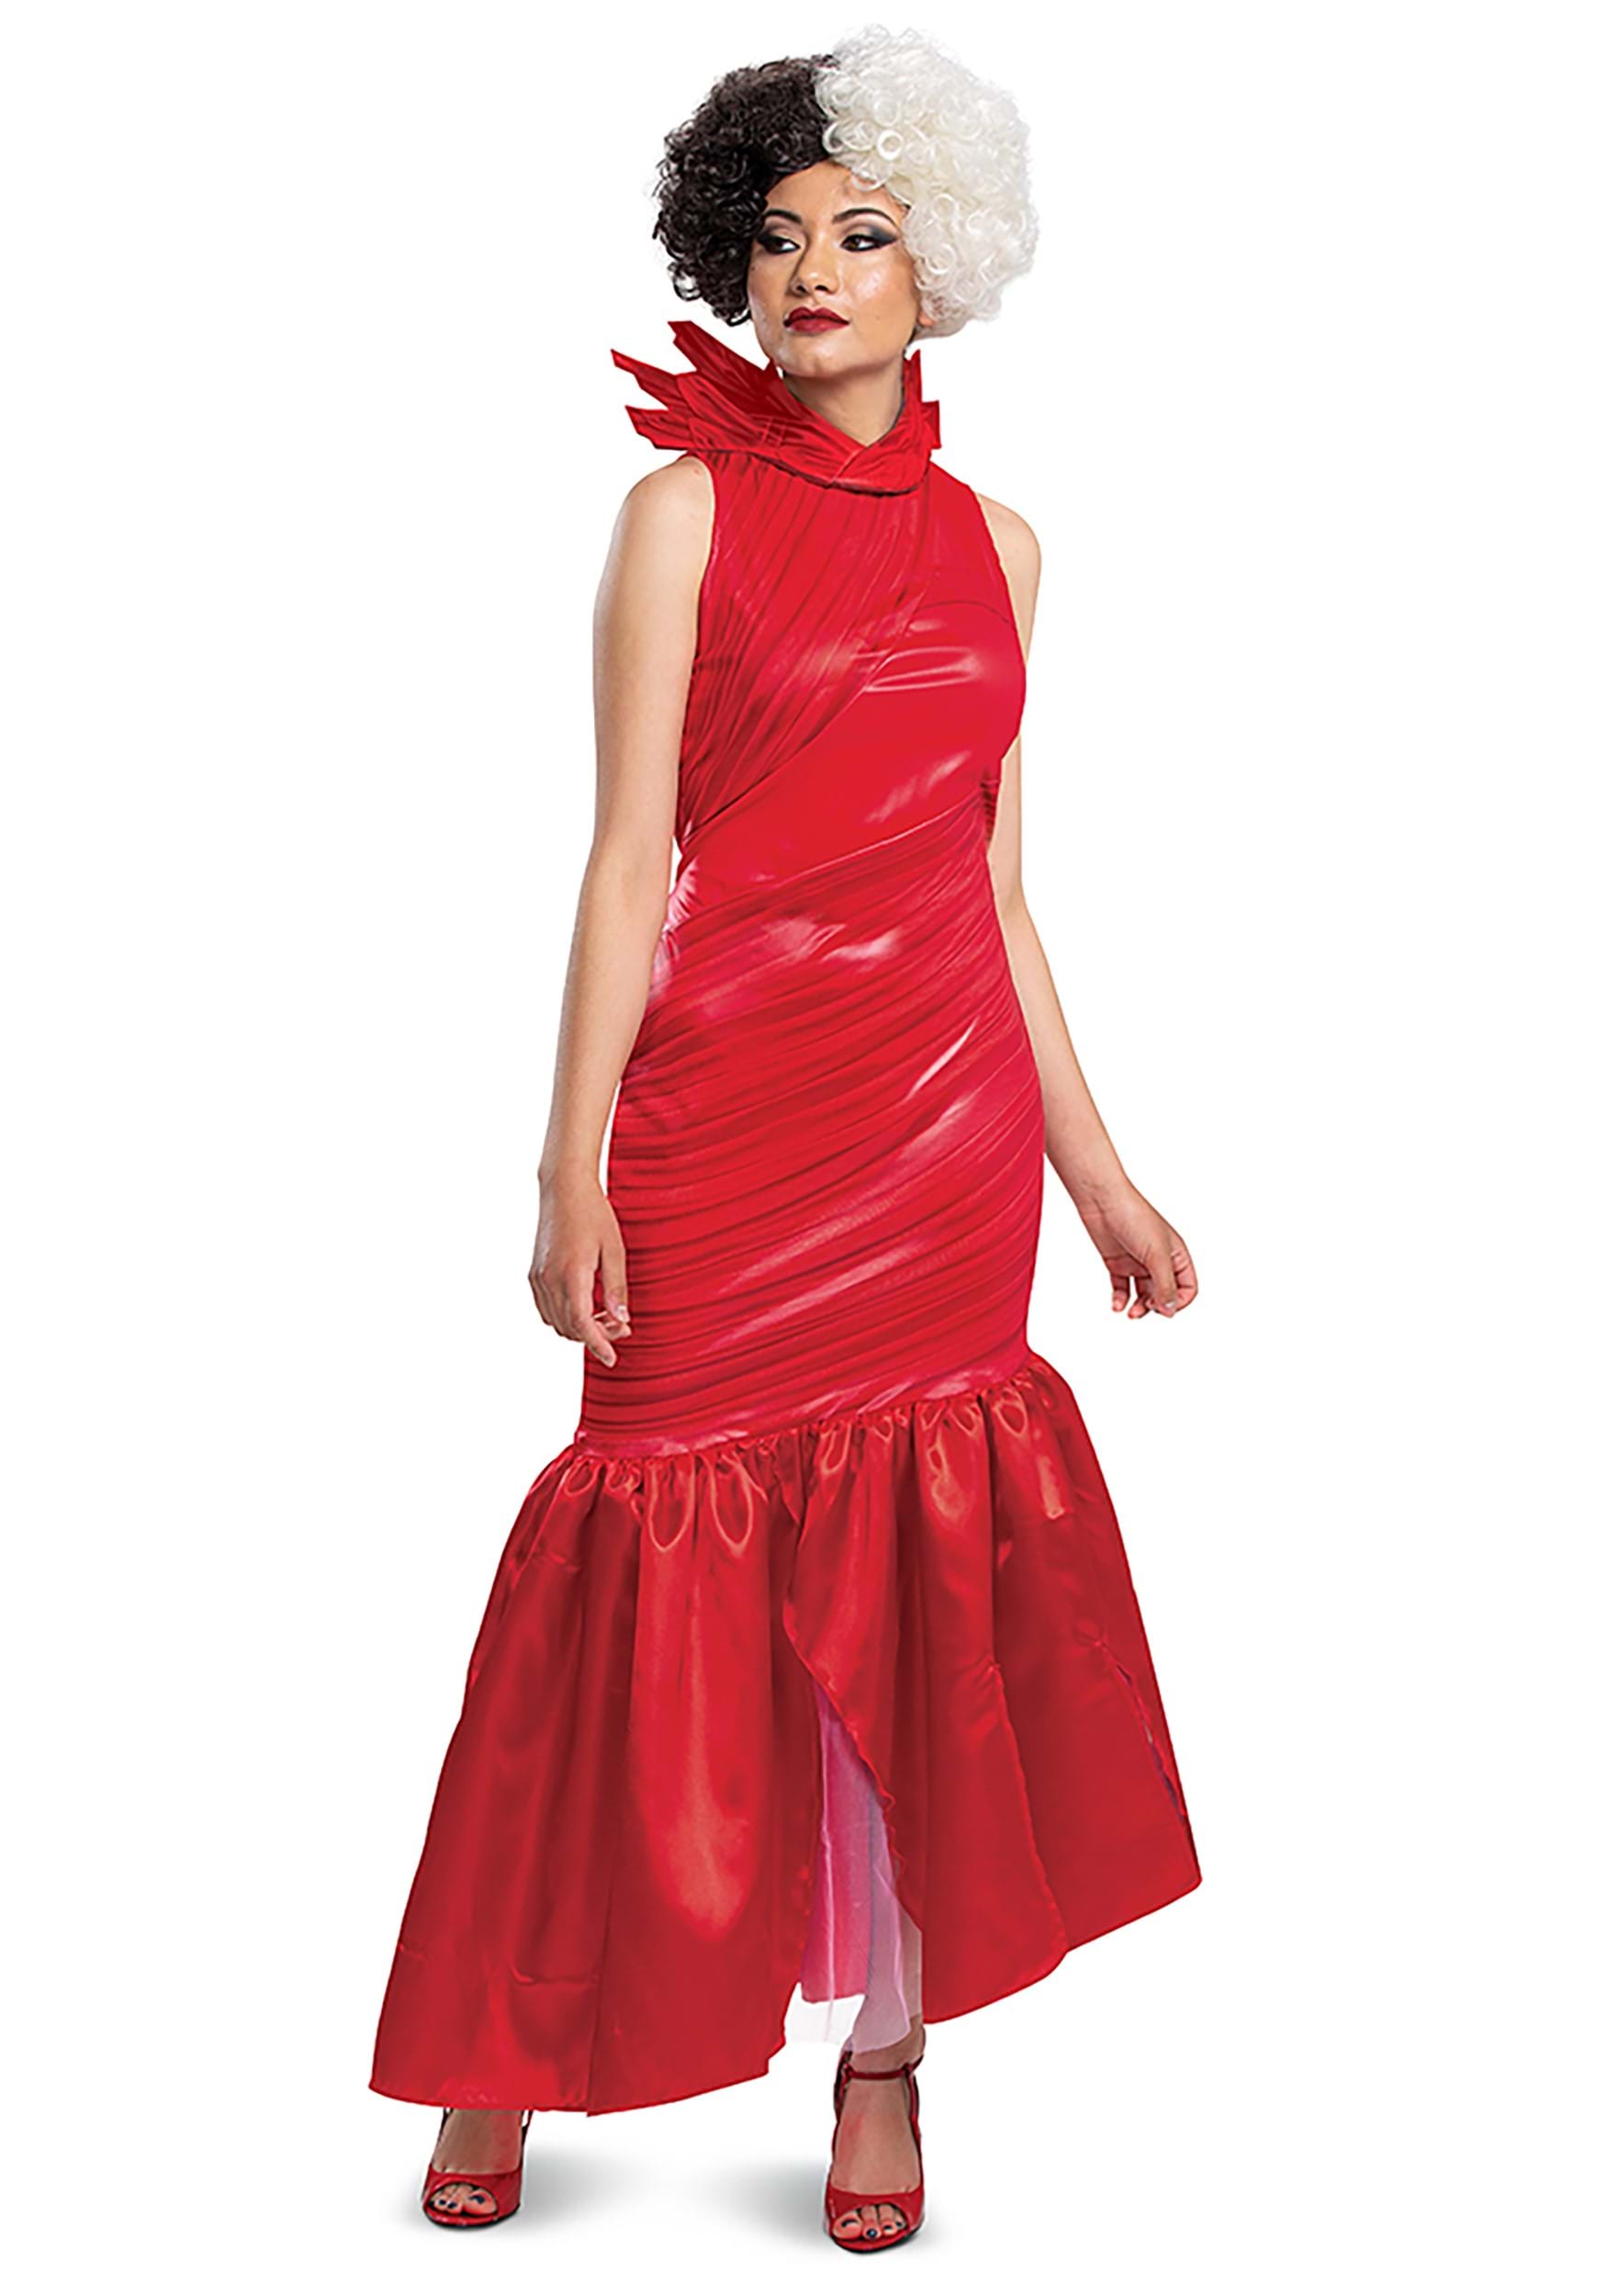 Cruella De Vil Cosplay Costumes Fashion Queen Red Dresses Wedding